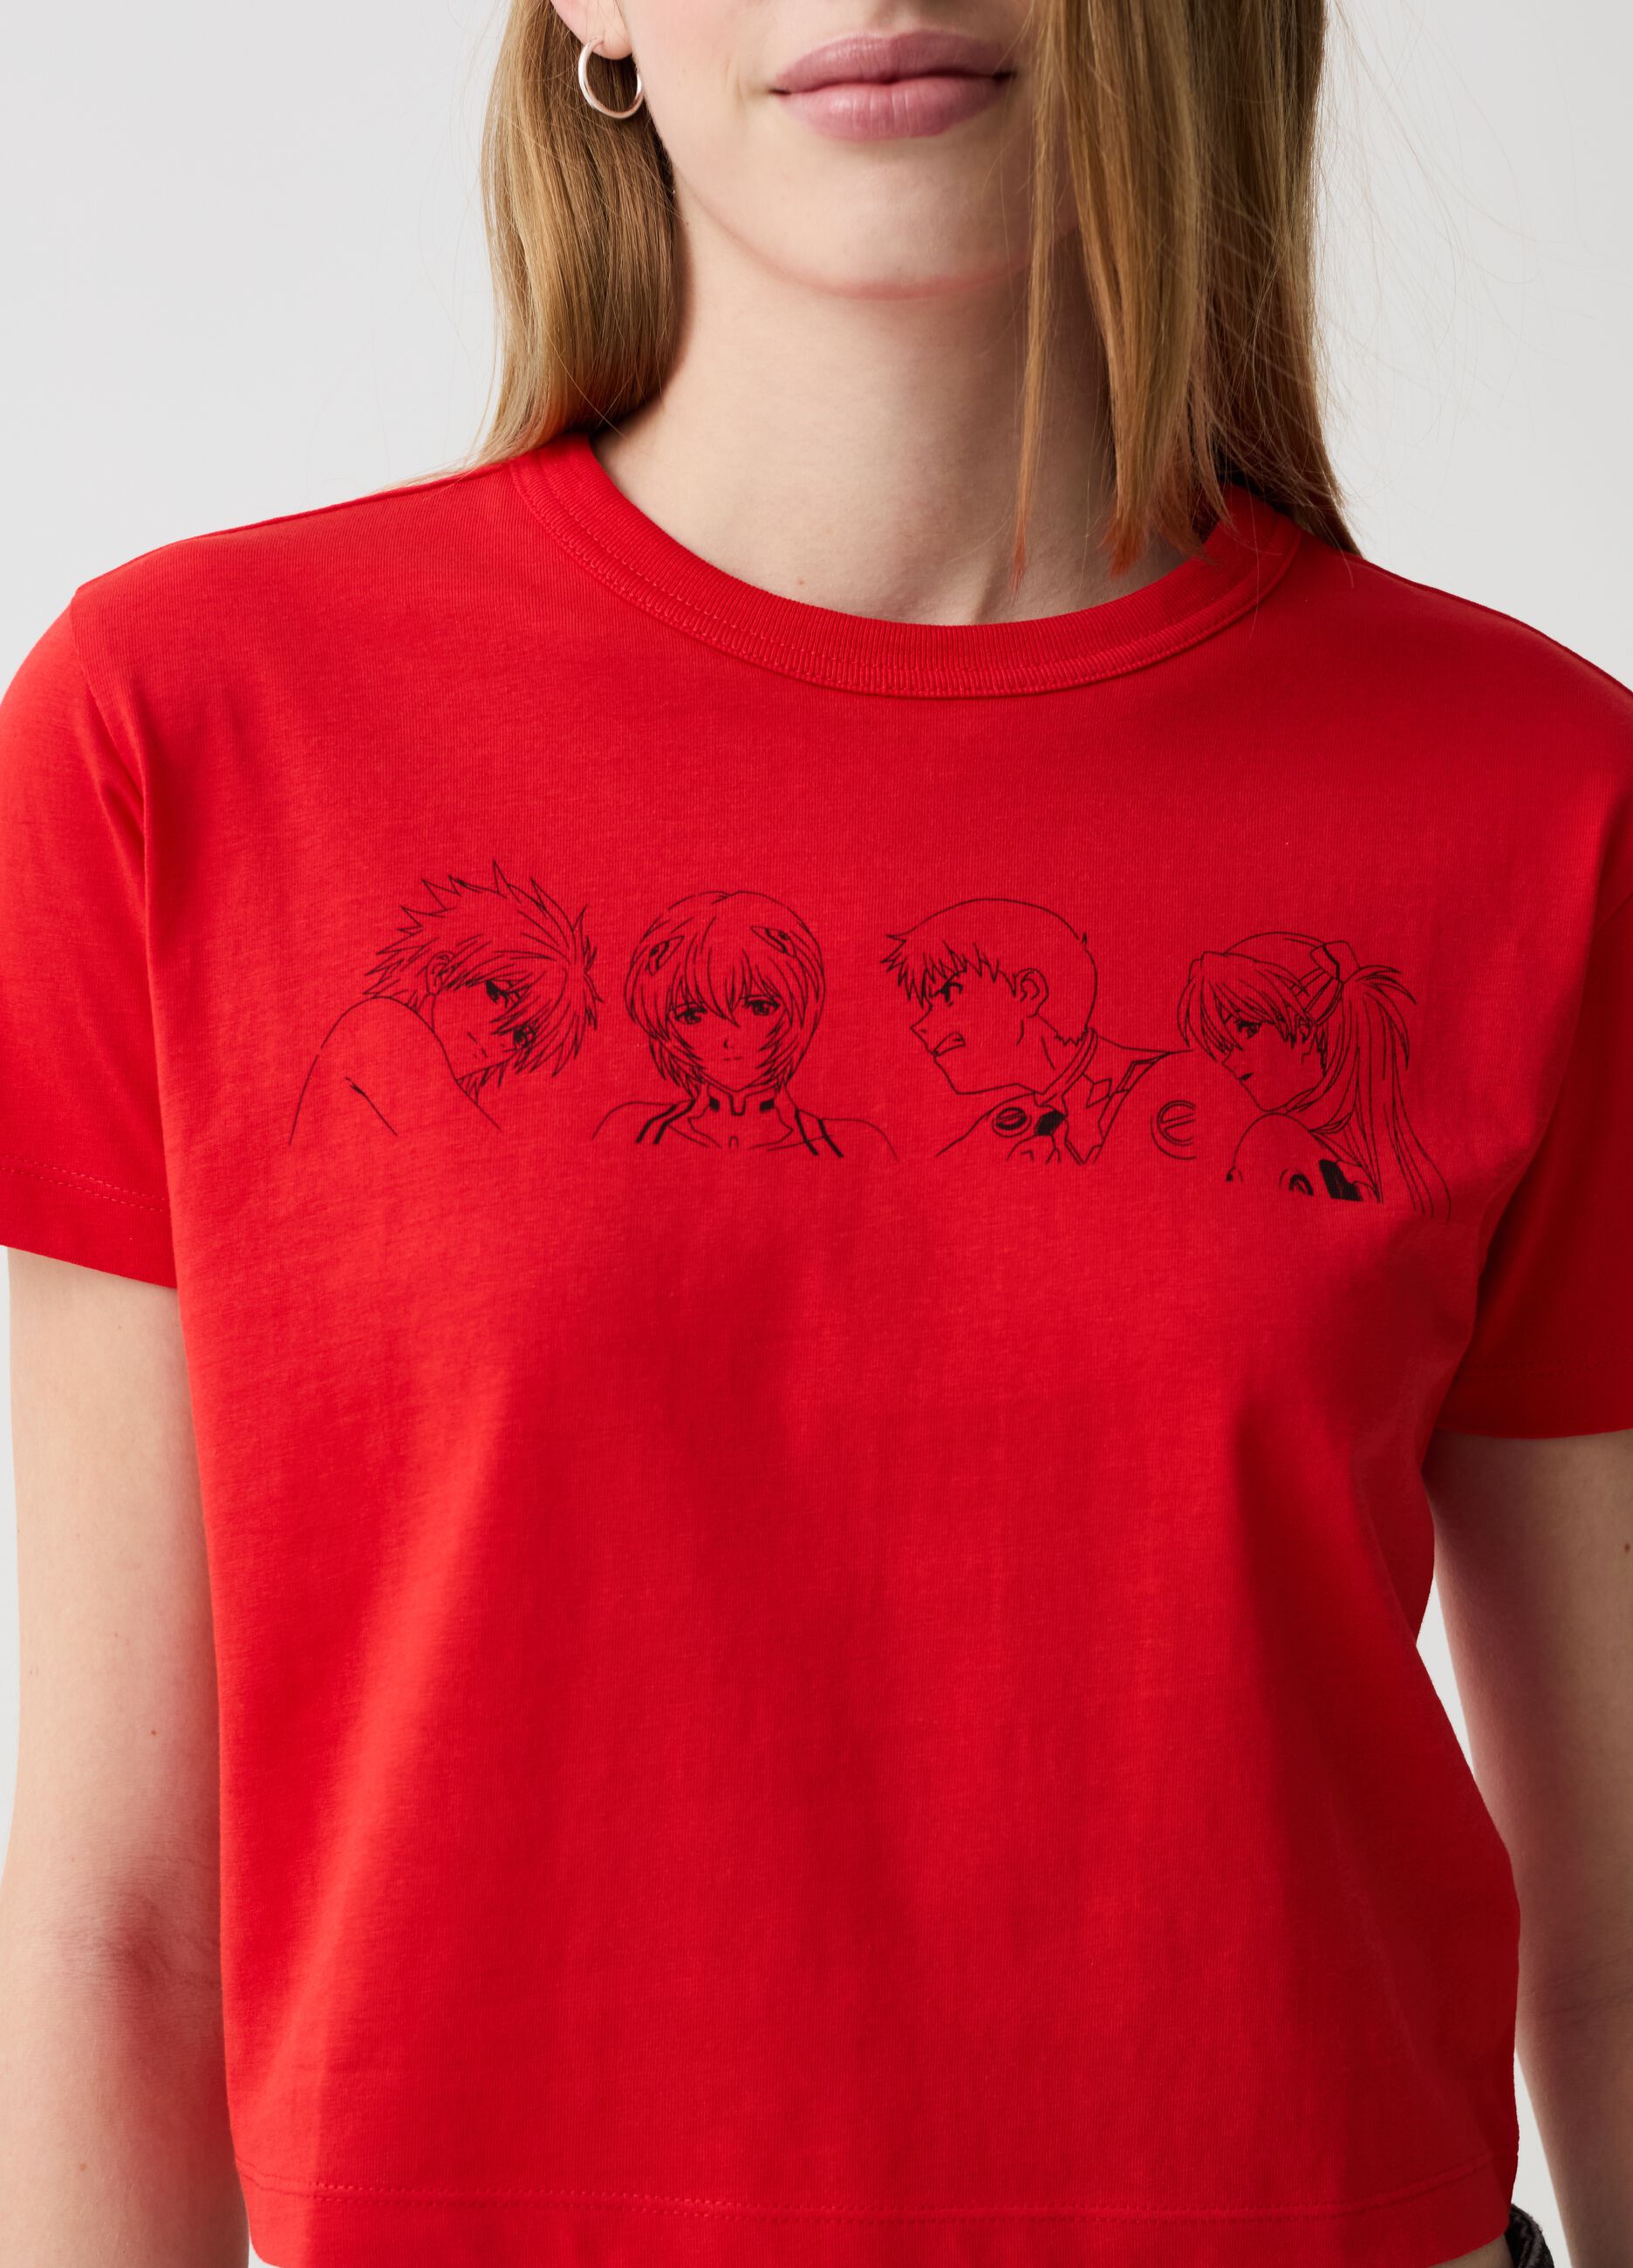 Camiseta corta estampado Neon Genesis Evangelion